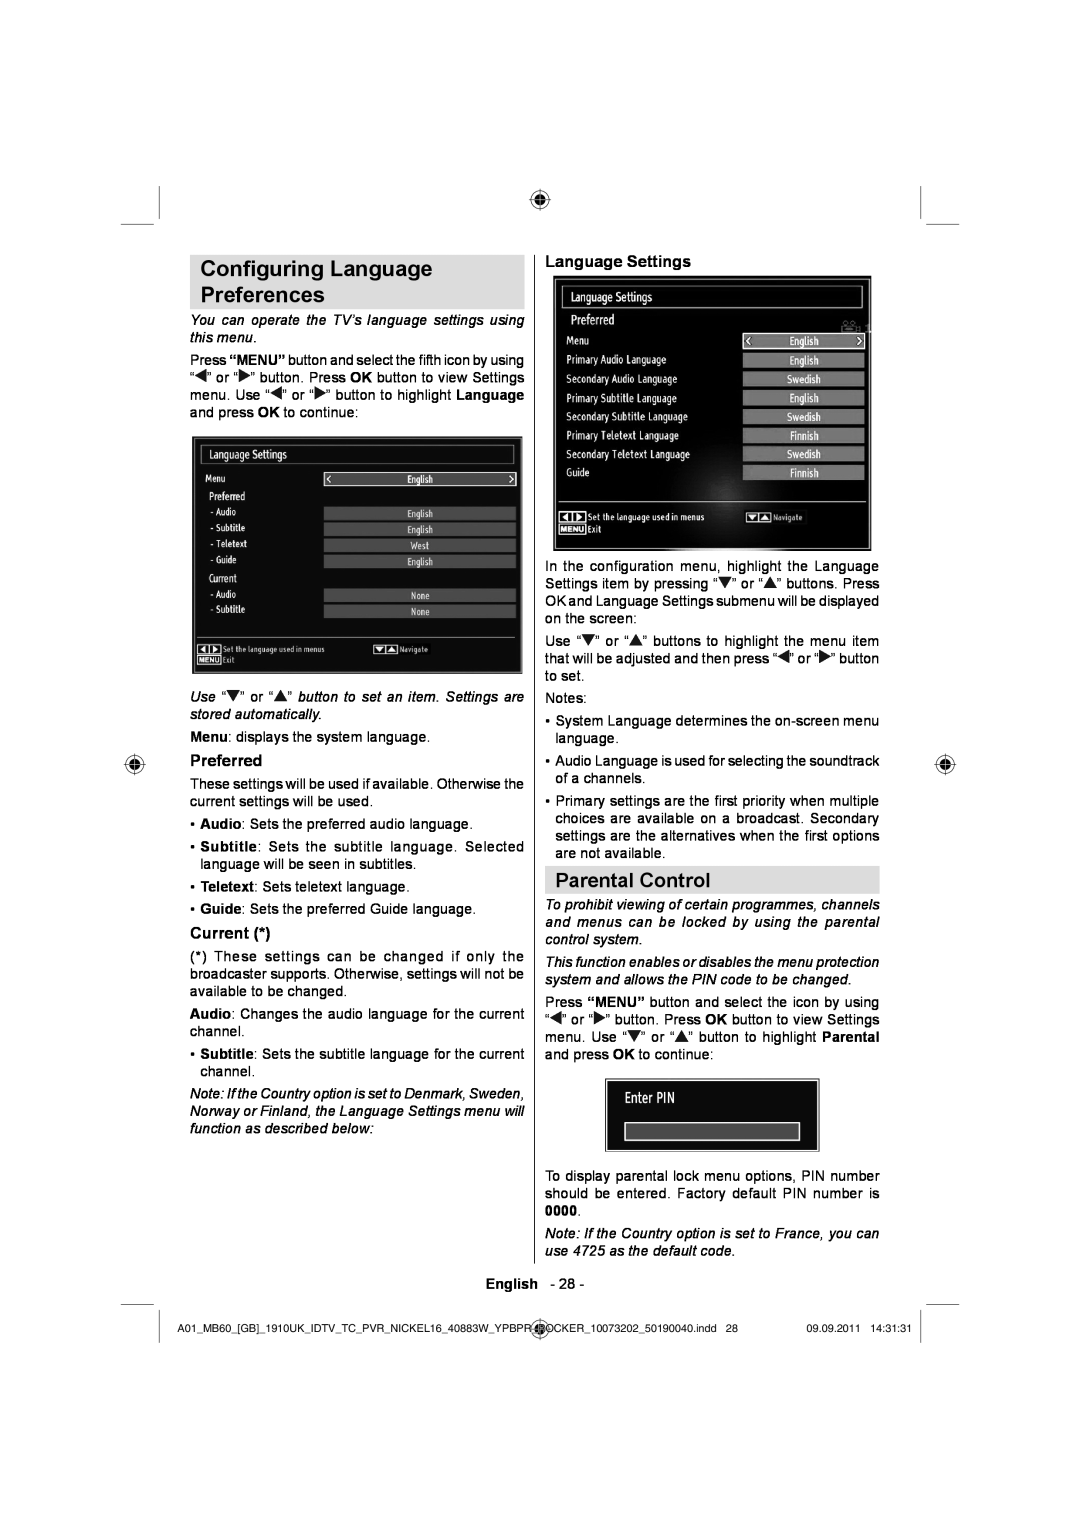 Sharp LC-40SH340E Conﬁguring Language Preferences, Parental Control, Preferred, Current, Language Settings, English 